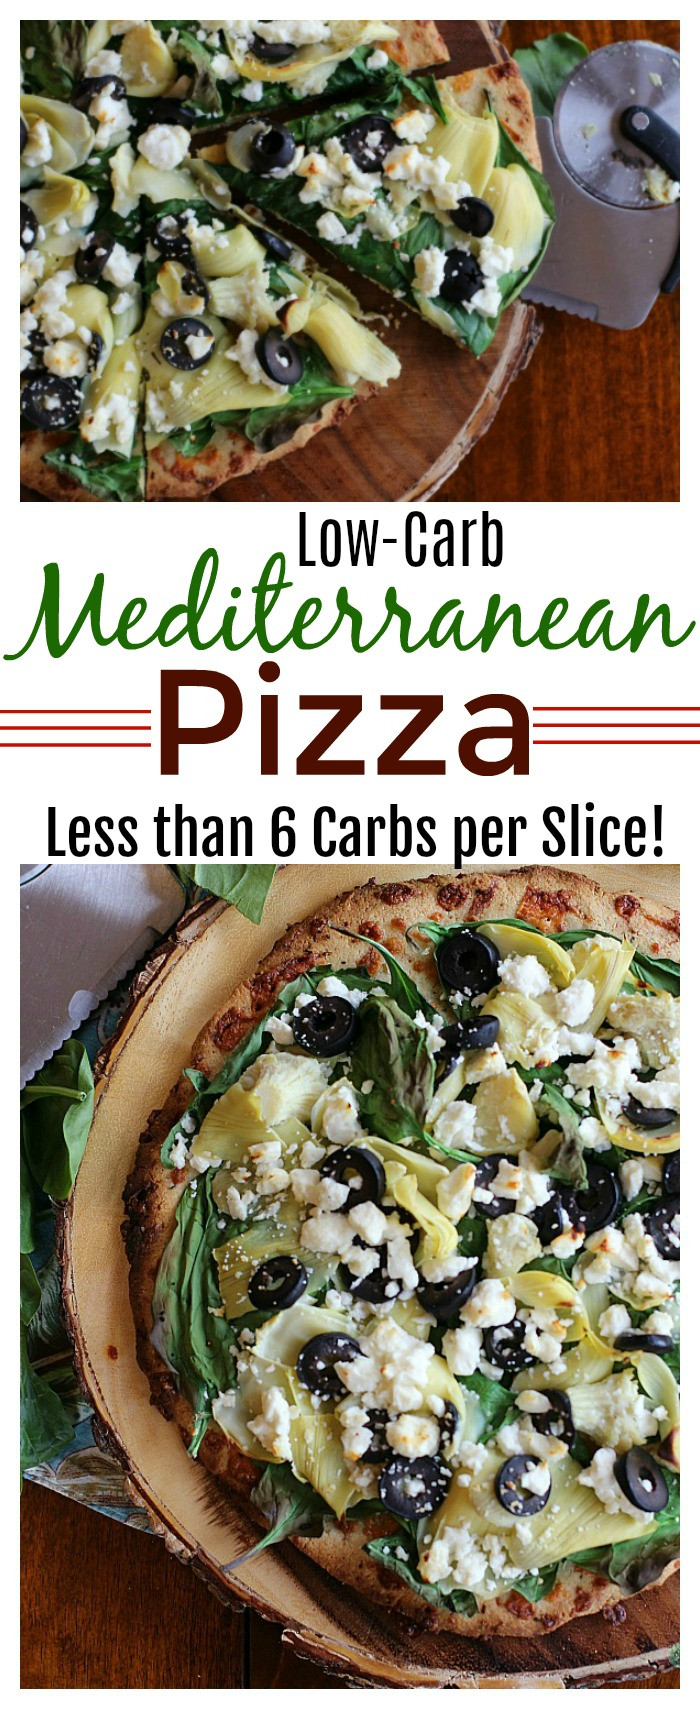 Low Carb Mediterranean Diet Recipes
 Low Carb Mediterranean Pizza